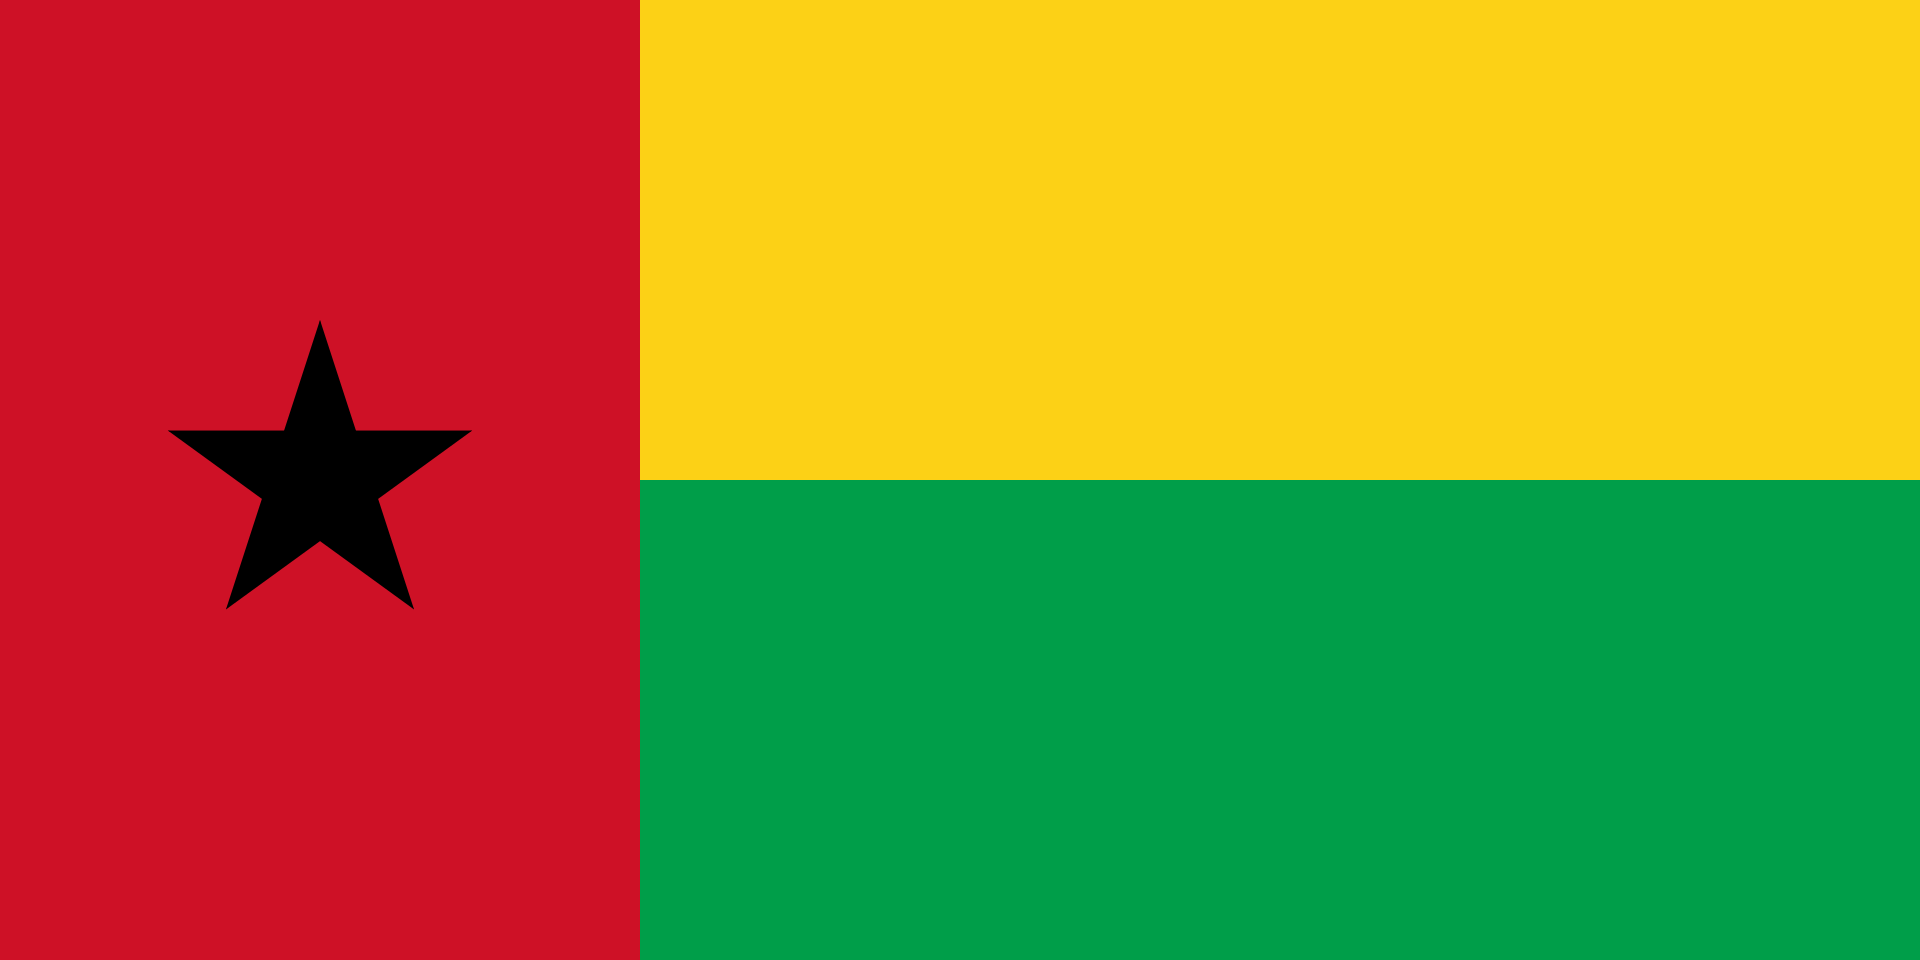 Гвинея-Бисау - Республика